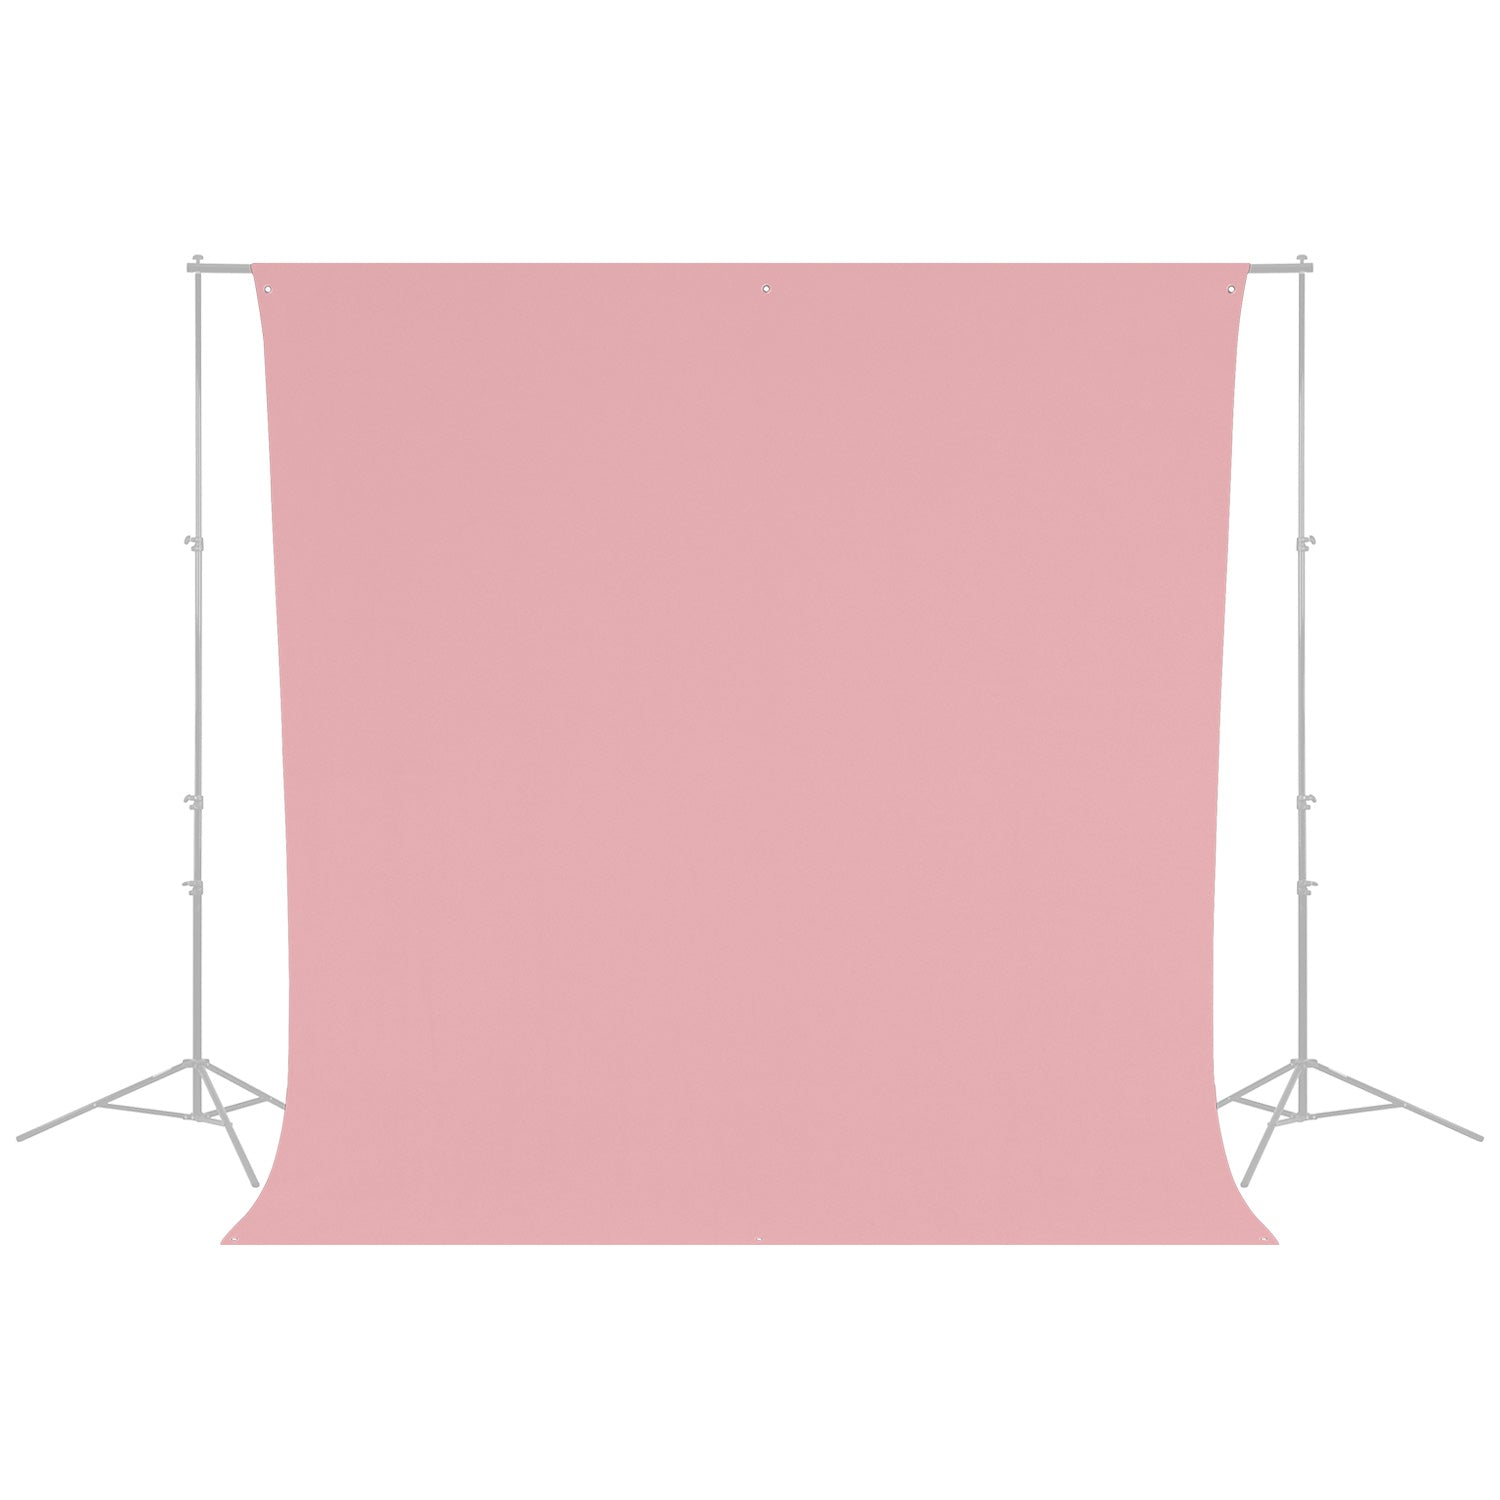 Wrinkle-Resistant Backdrop - Blush Pink (9' x 10')